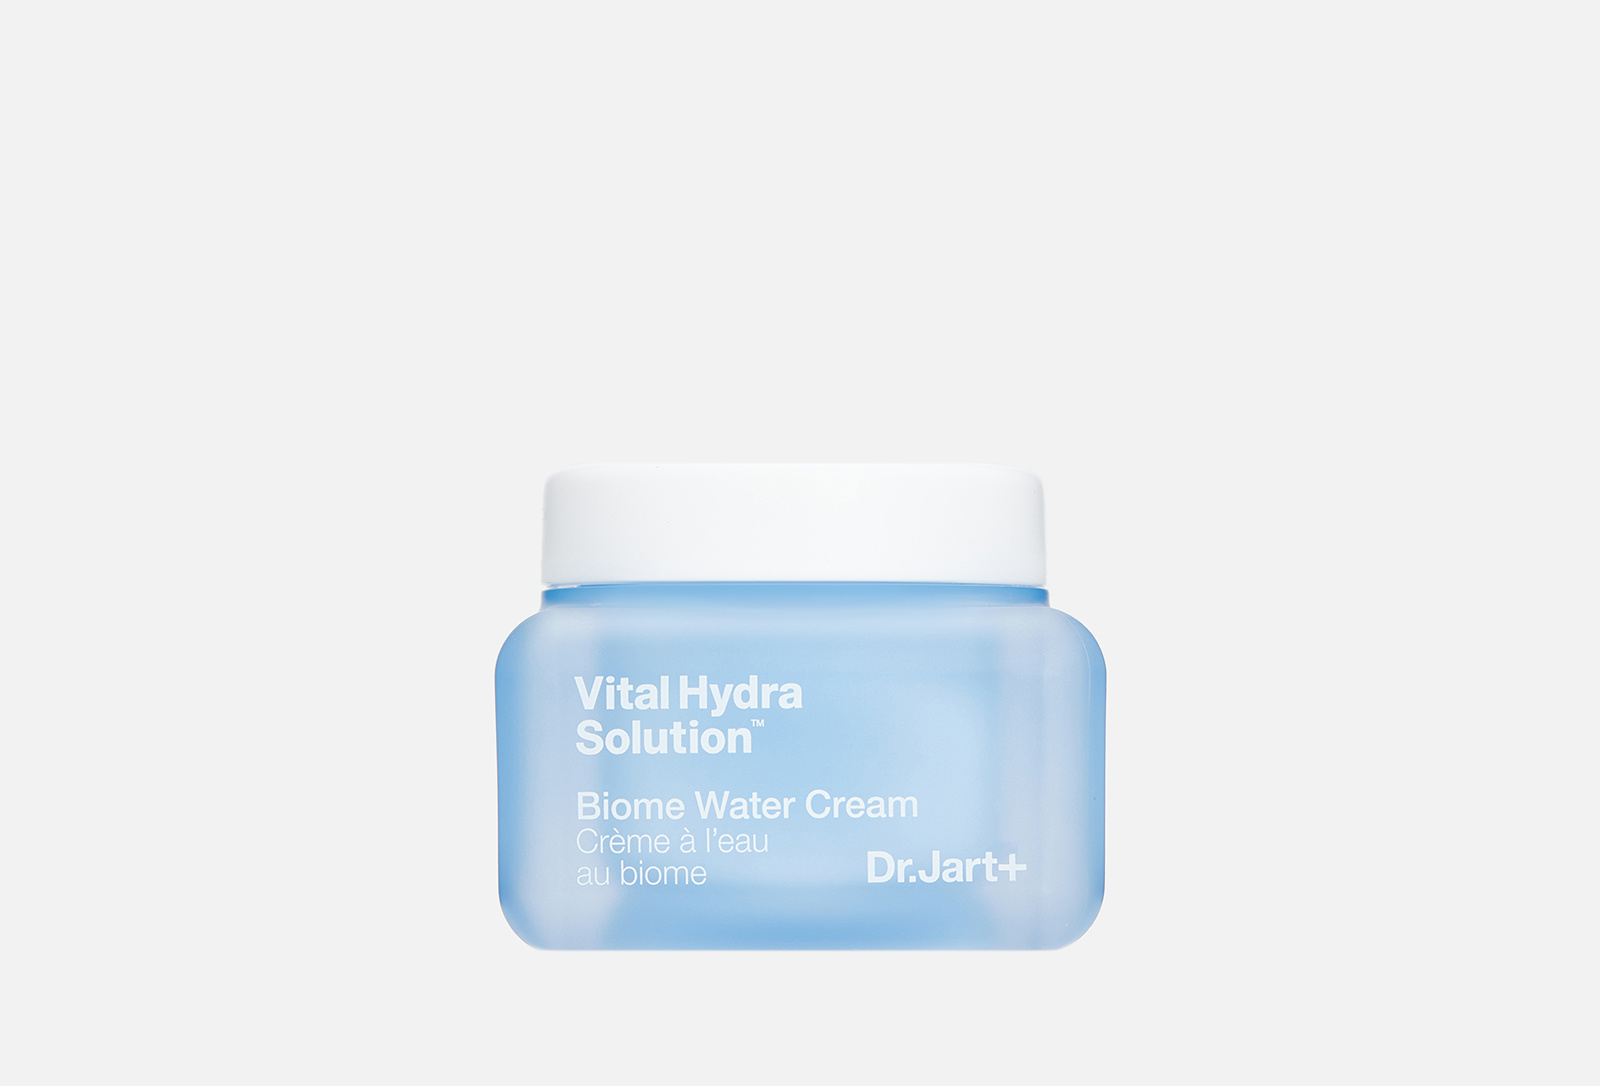 Купить Крем-гель для лица Dr.Jart Vital Hydra Solution Biome Water Cream 50 мл, Dr.Jart+